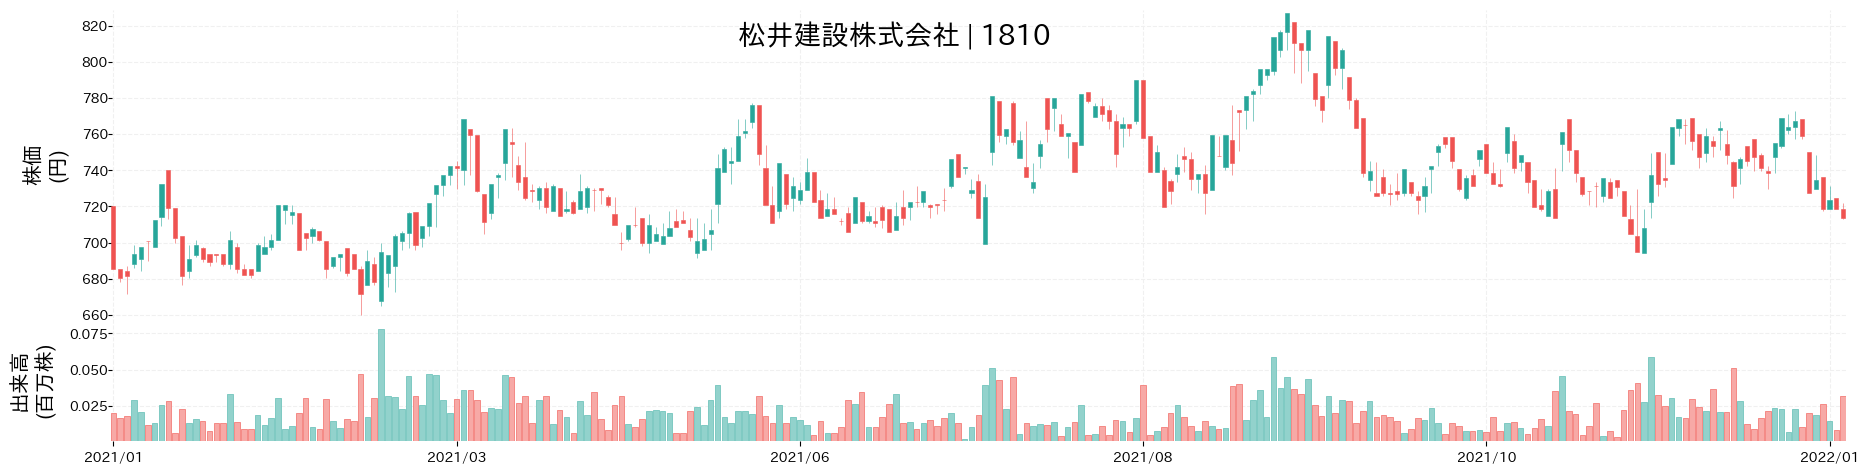 松井建設の株価推移(2021)